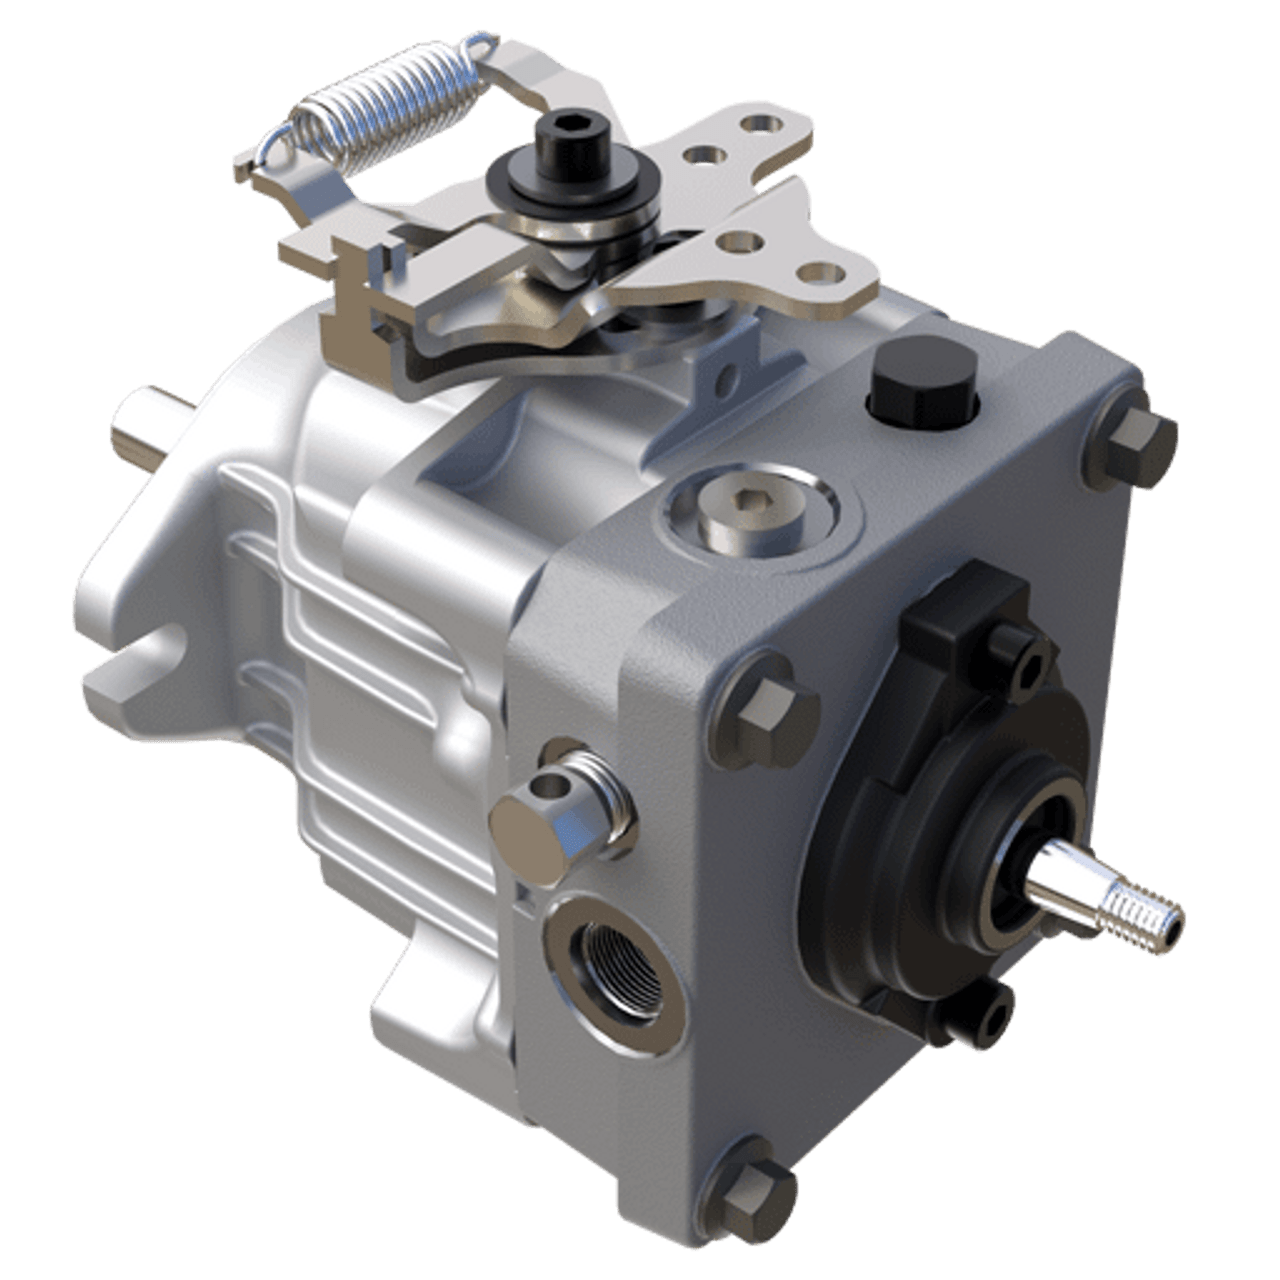 Hydro Gear PG-1HCC-DY1X-XXXX Hydraulic Pump P Series | Original OEM Part | Free Shipping - LawnMowerPartsWorld.com